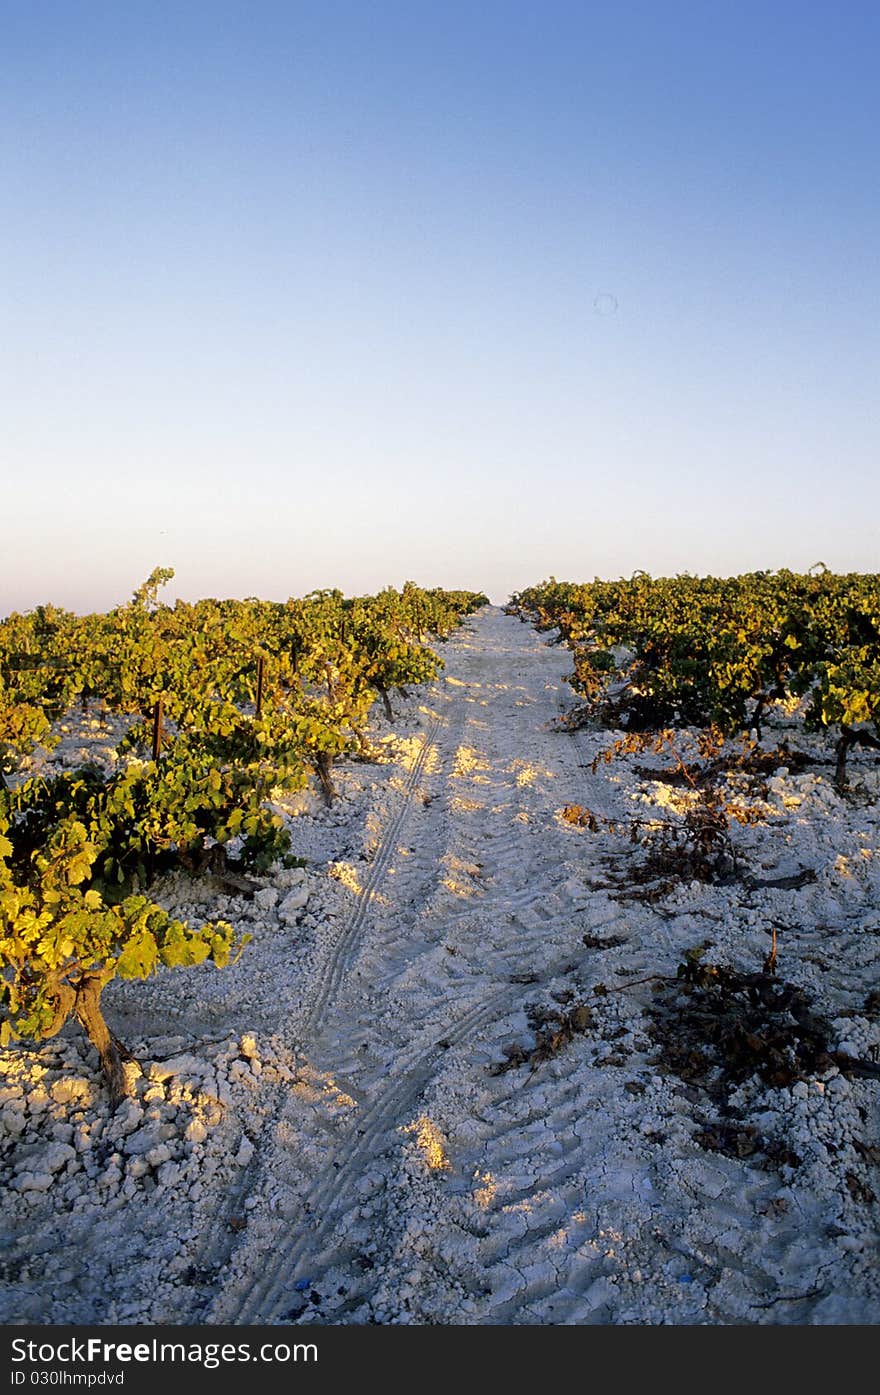 Rows of wine on white sandy ground.